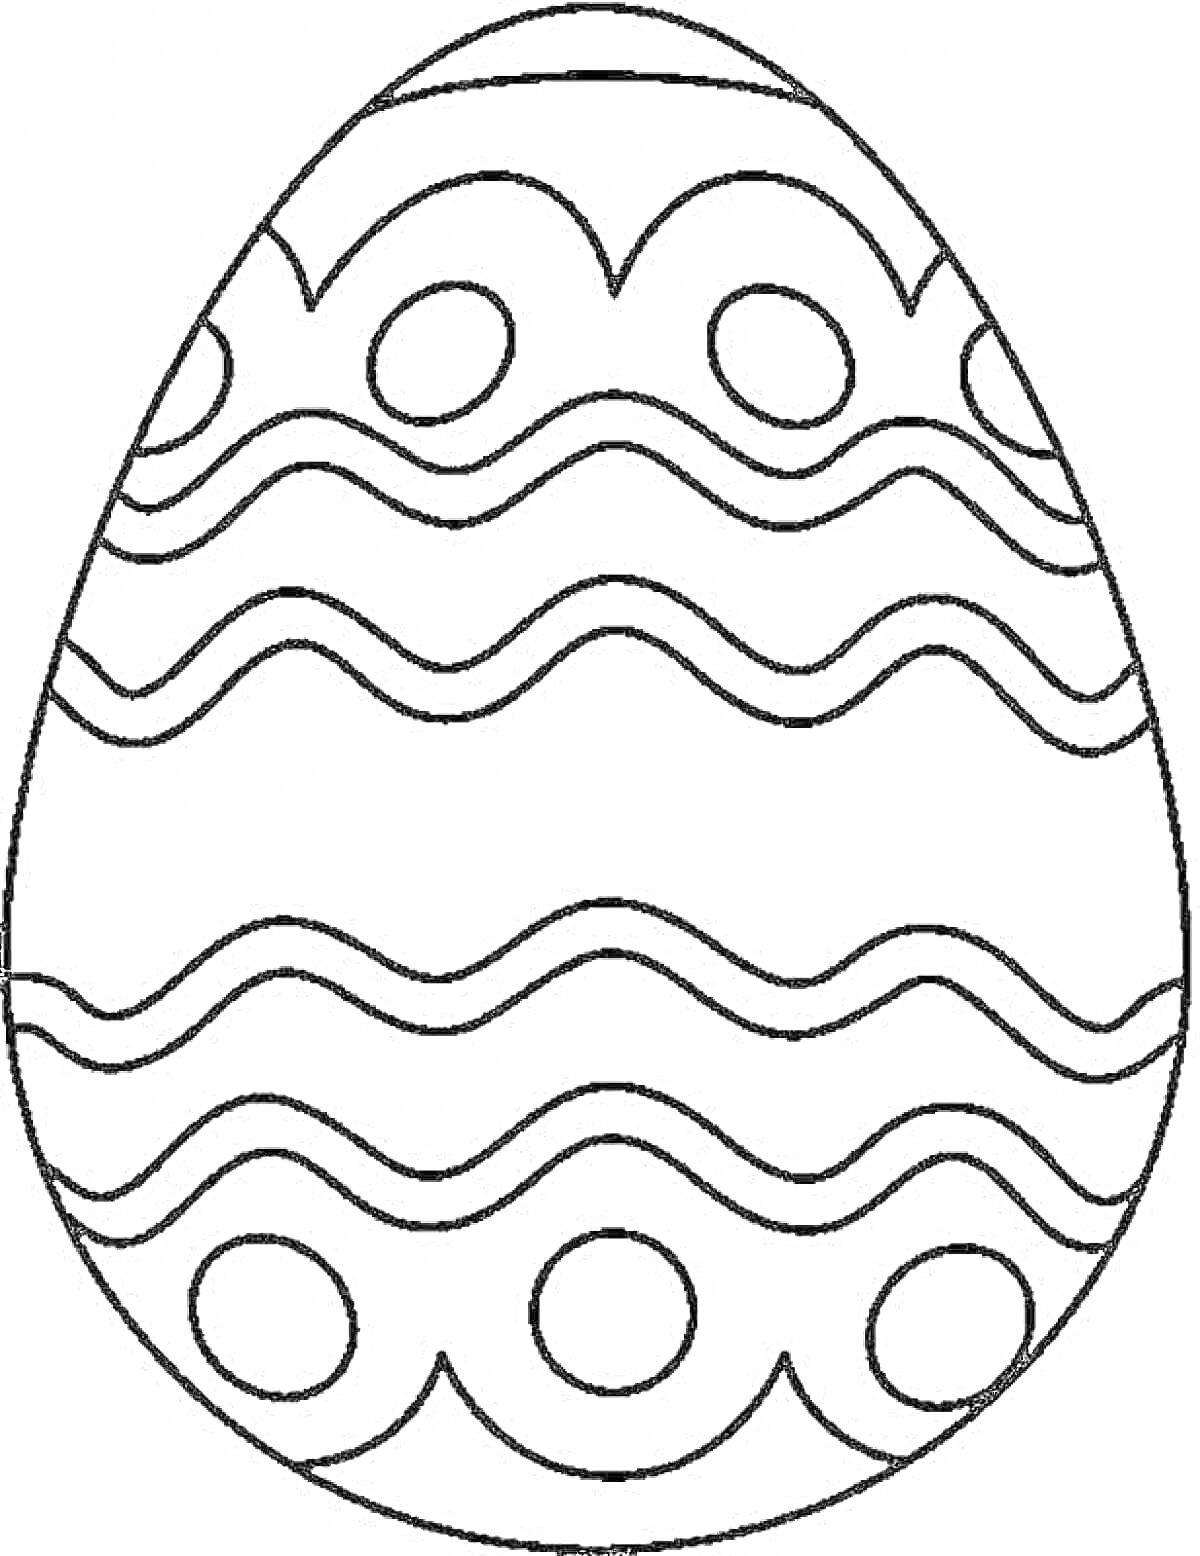 Раскраска Яйцо с волнистыми линиями и кругами